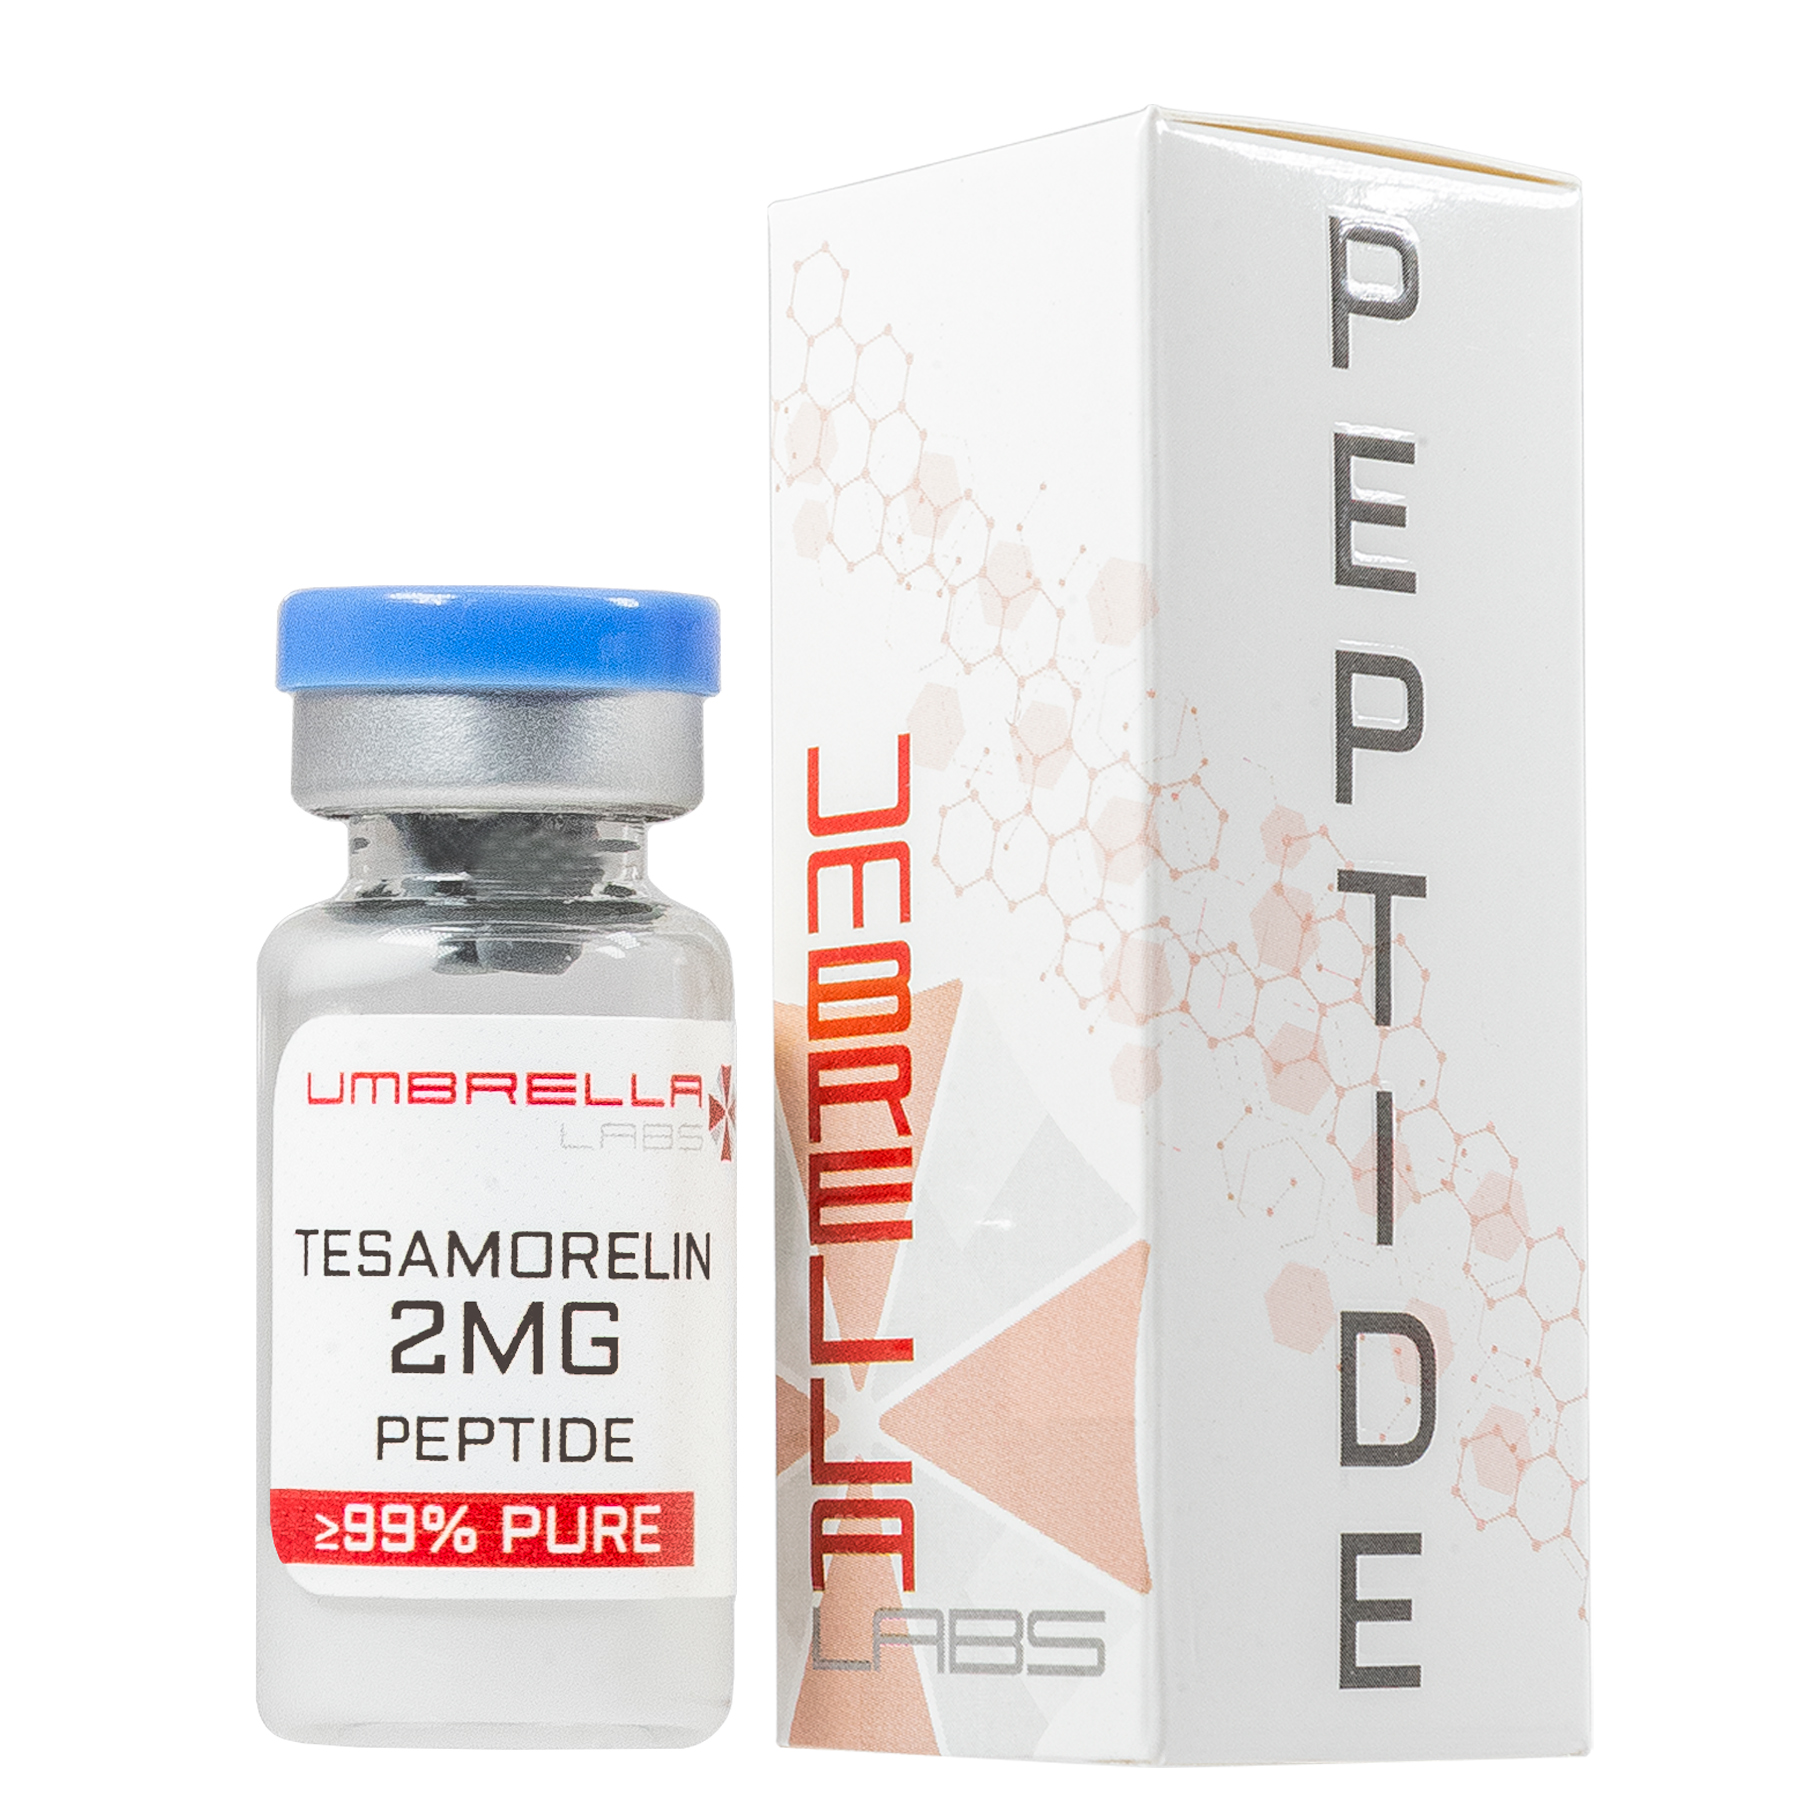 tesamorelin peptide